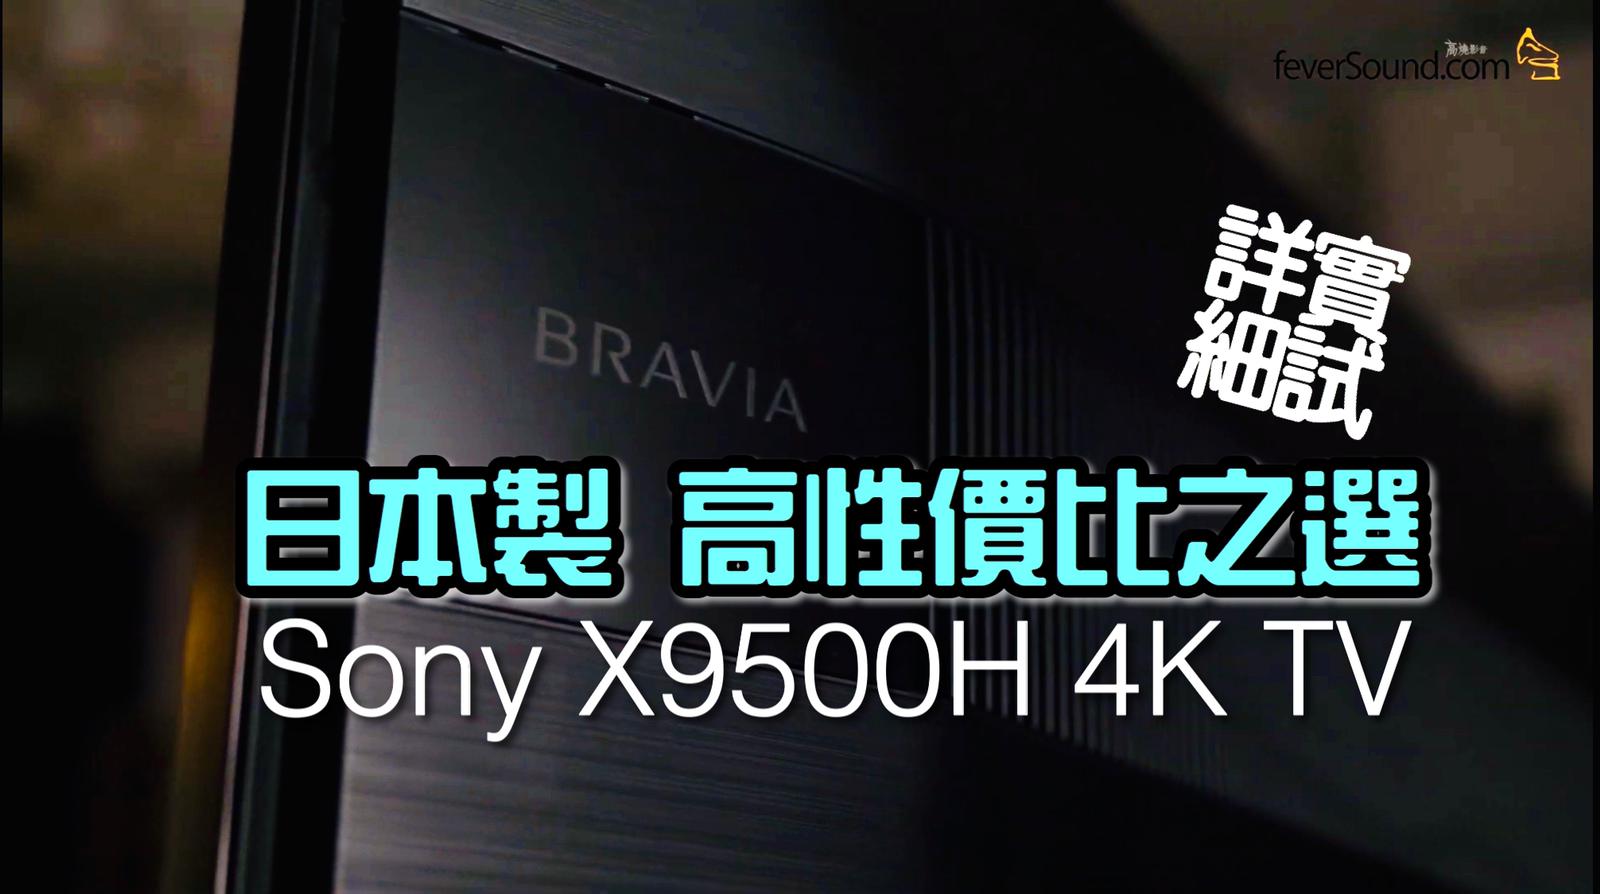 Sony X9500H 電視艾域評測日本製+最強X1 Ultimate 晶片植入+Full Array LED 背光- feverSound.com